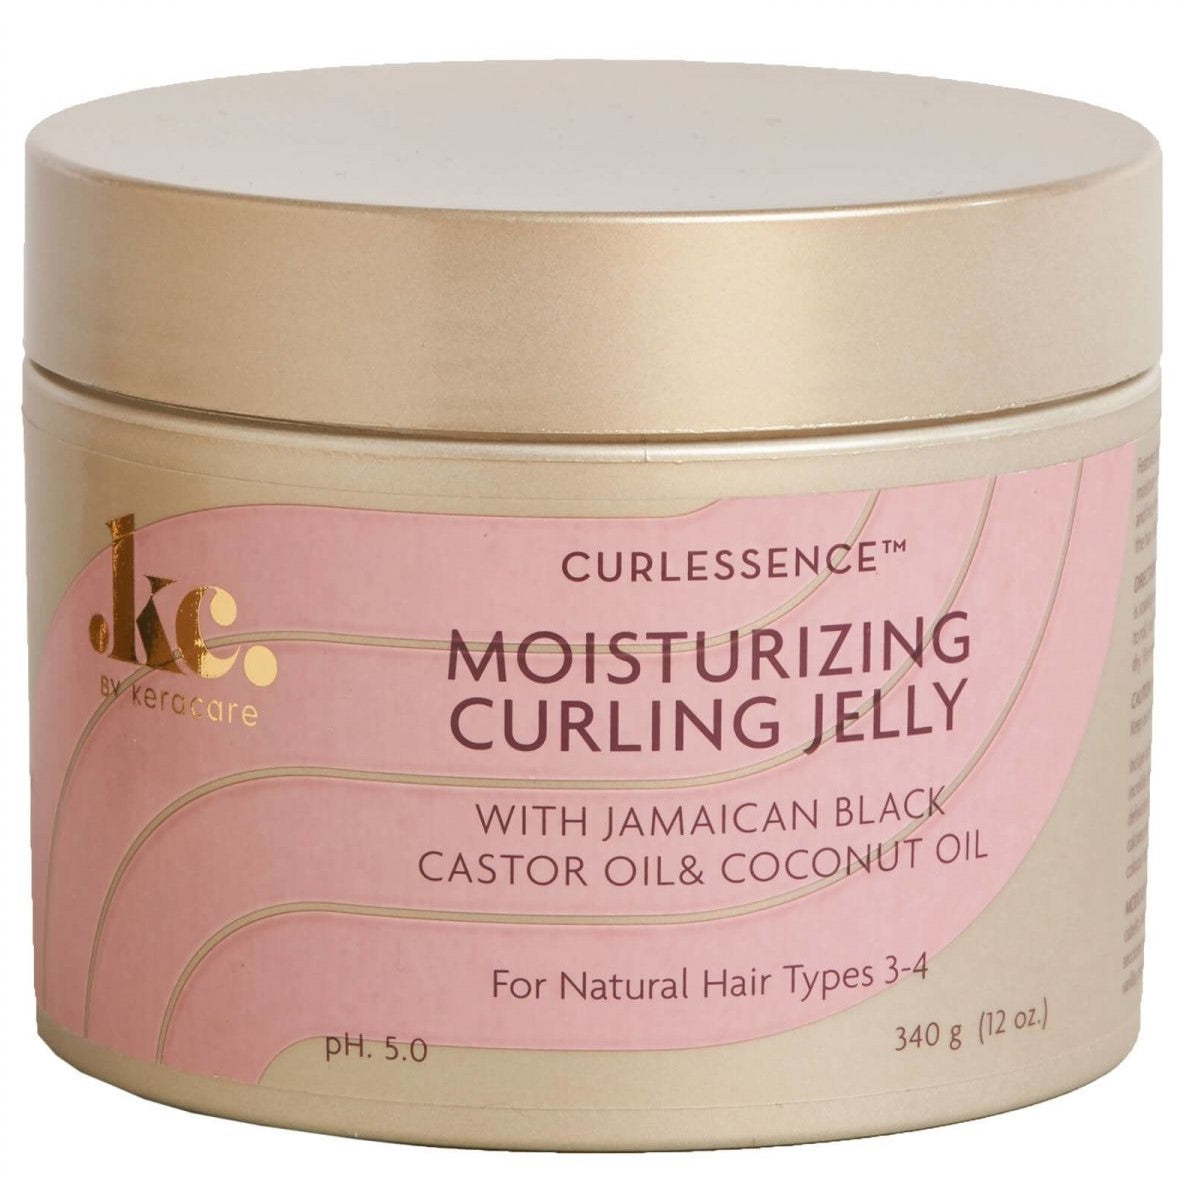 Keracare curlessence Moisturizing Curling Jelly 320G